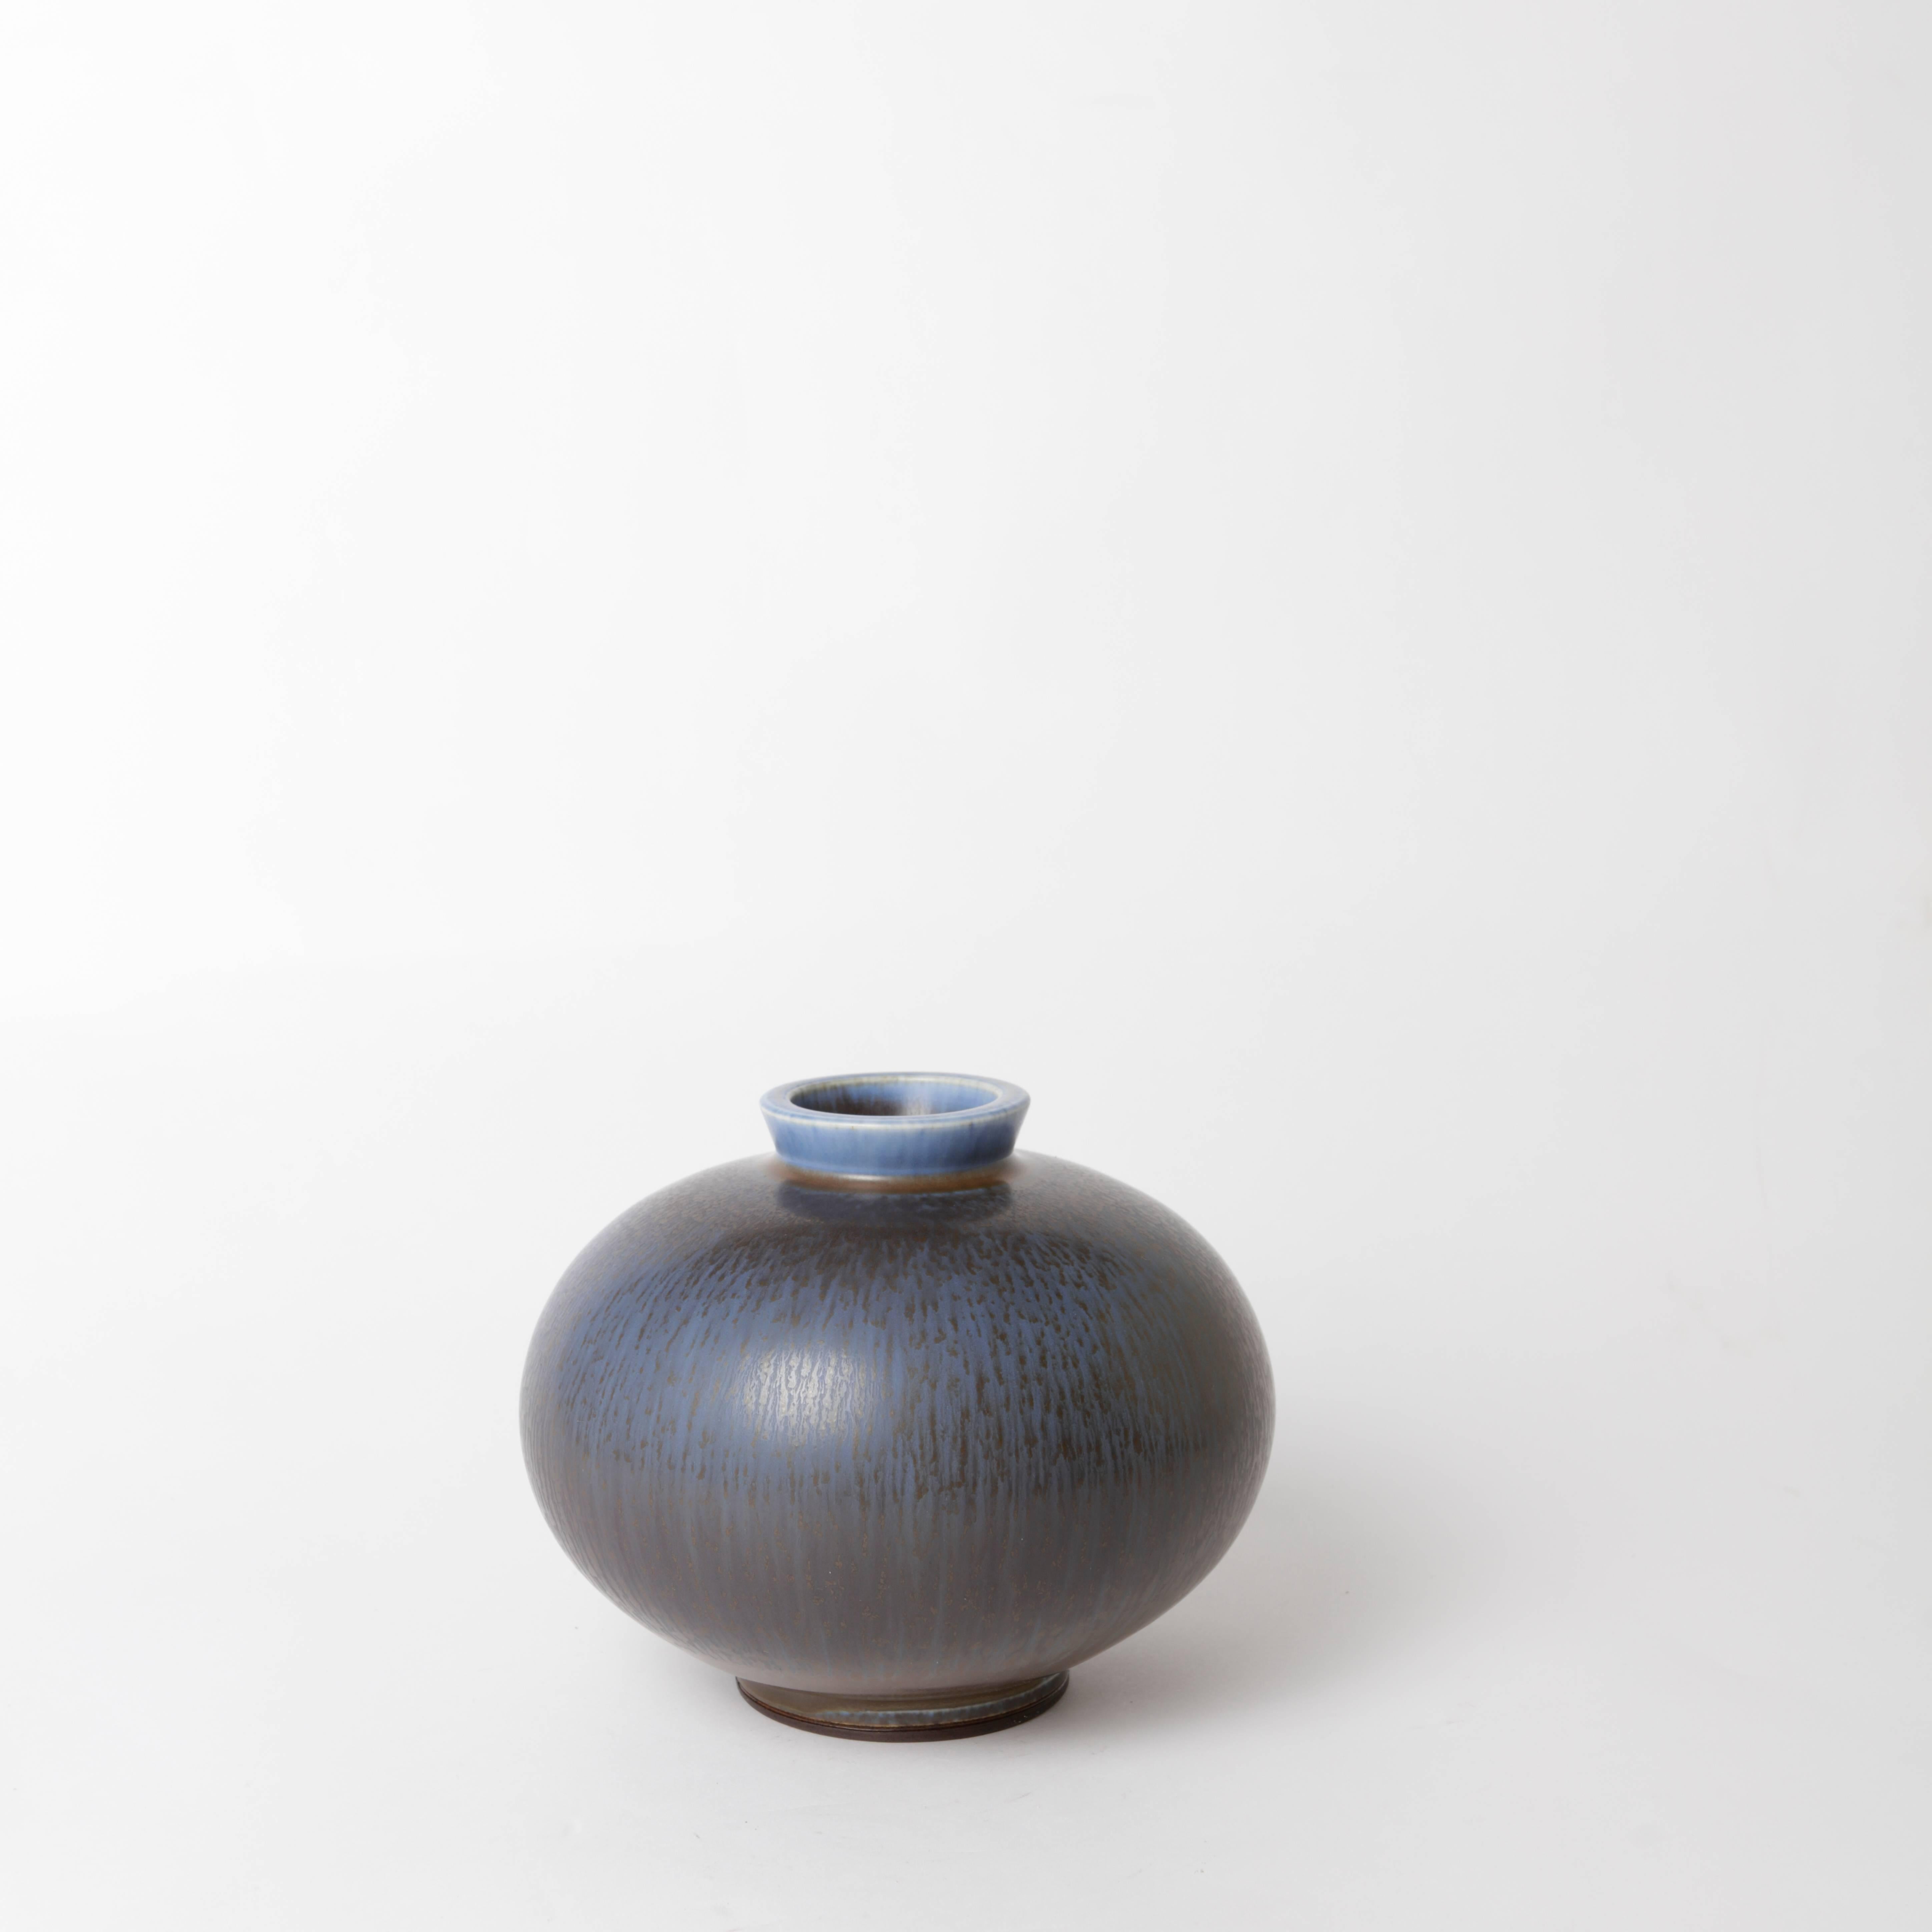 Unique stoneware vase by Berndt Friberg for Gustavsberg 1970 with harefur glaze.
Measure: Height 15cm/5.9